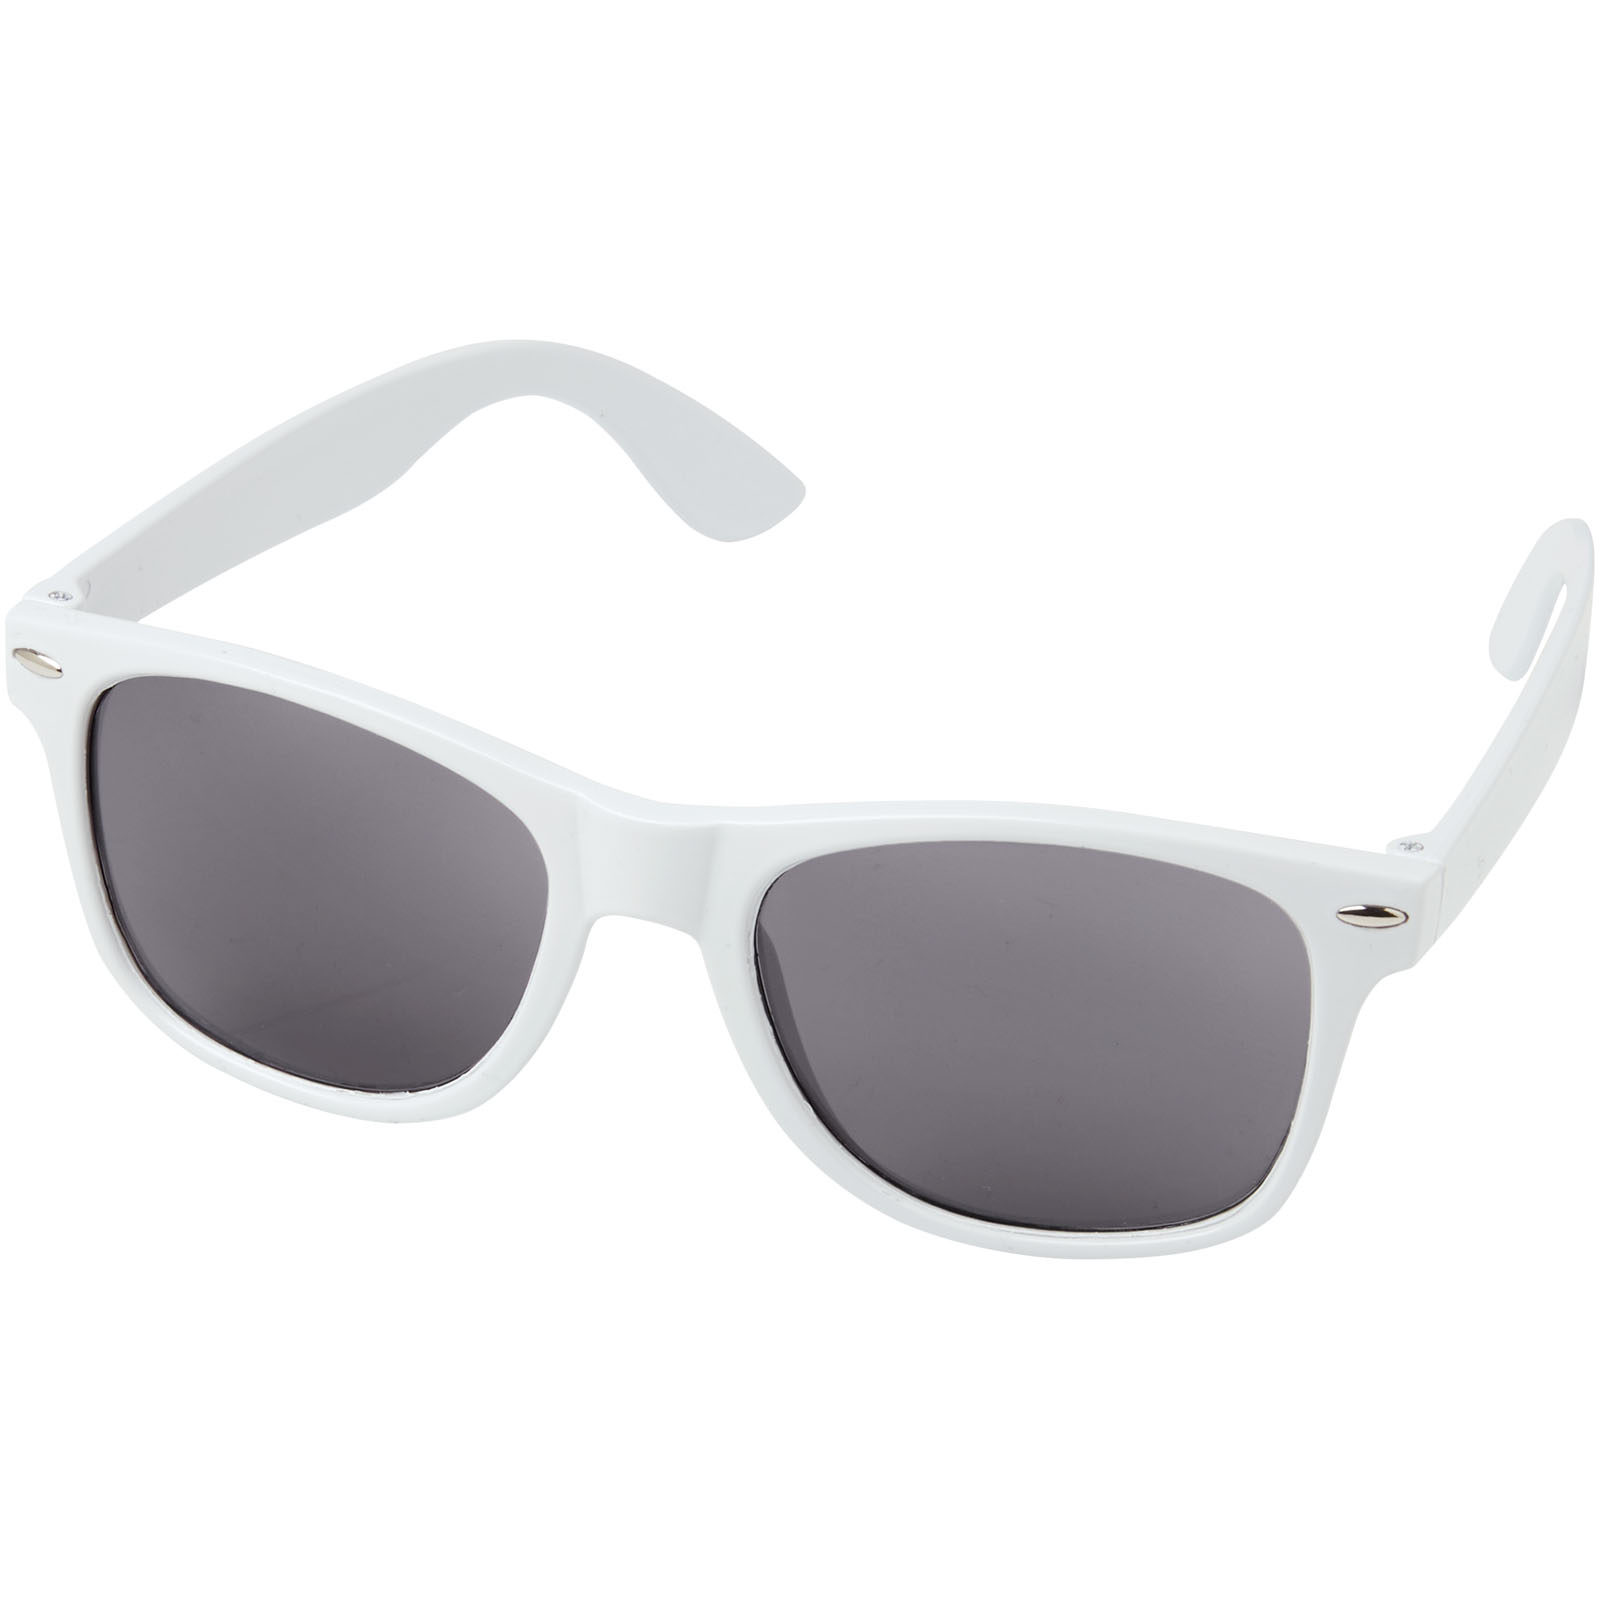 Sunglasses - Sun Ray rPET sunglasses